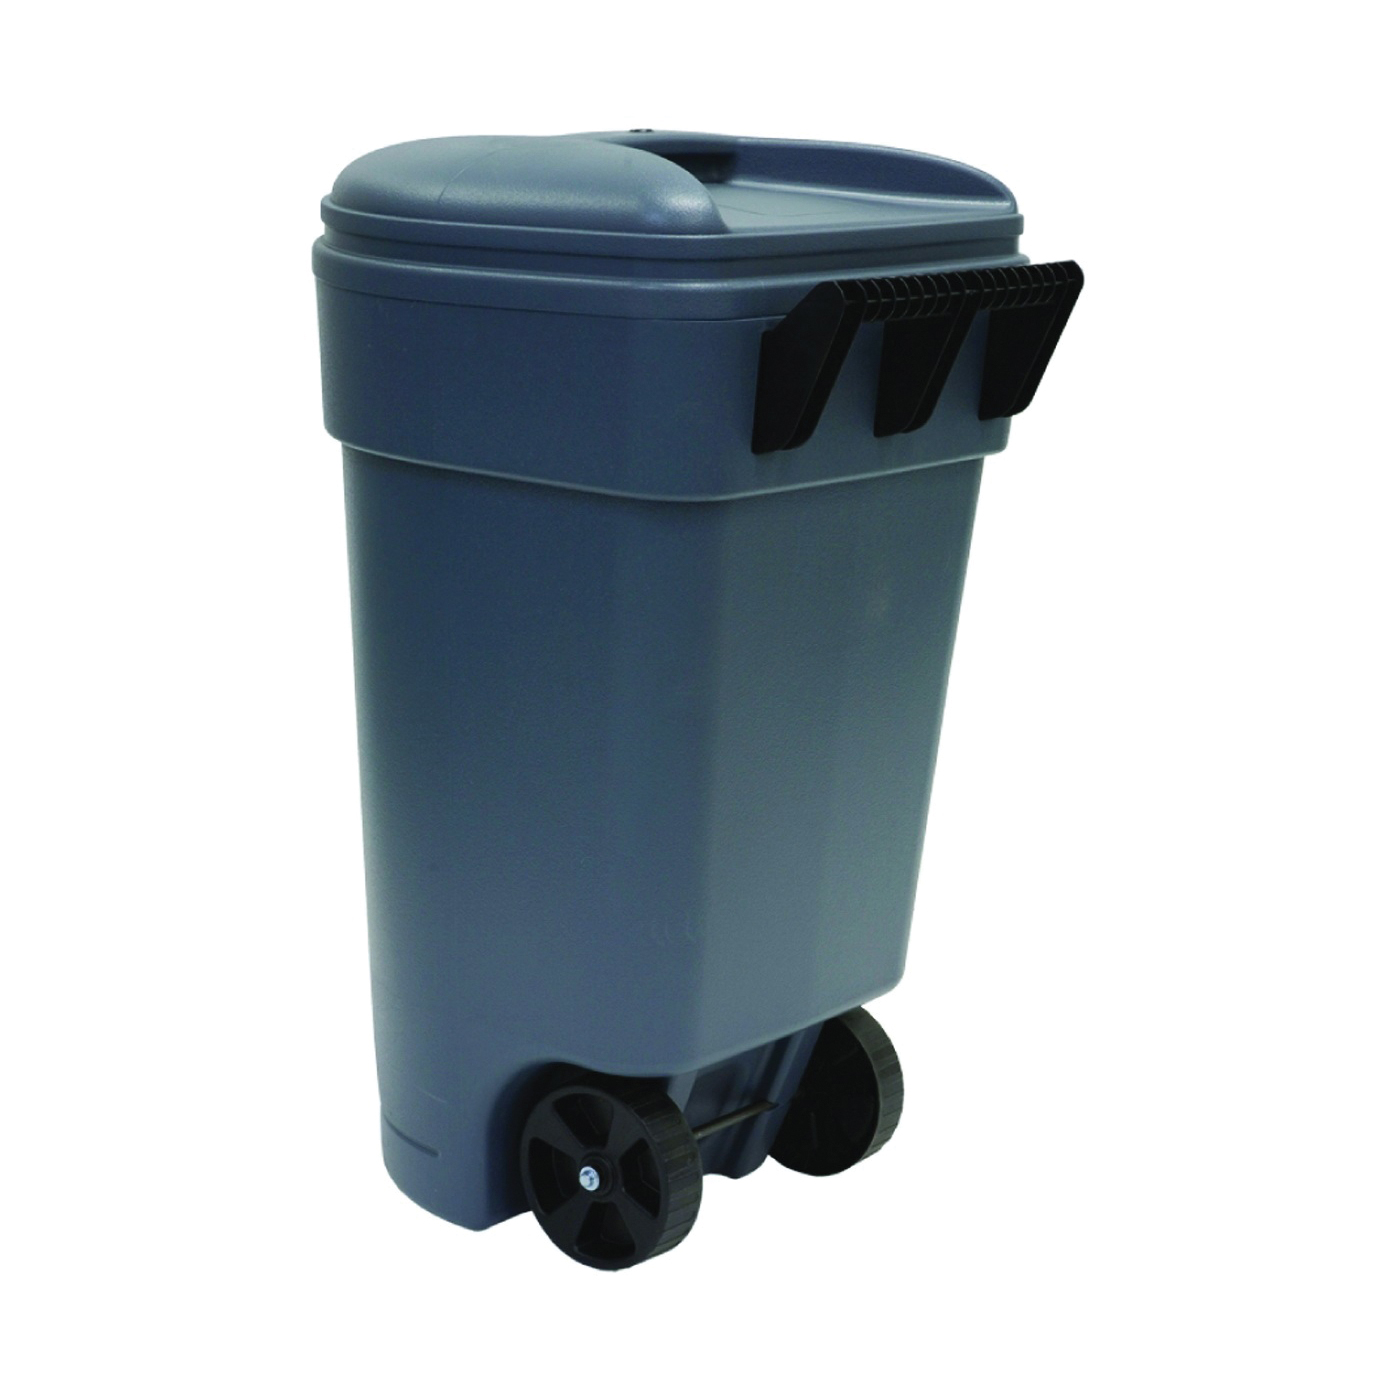 TB0041 Trash Can, 50 gal Capacity, Plastic, Gray